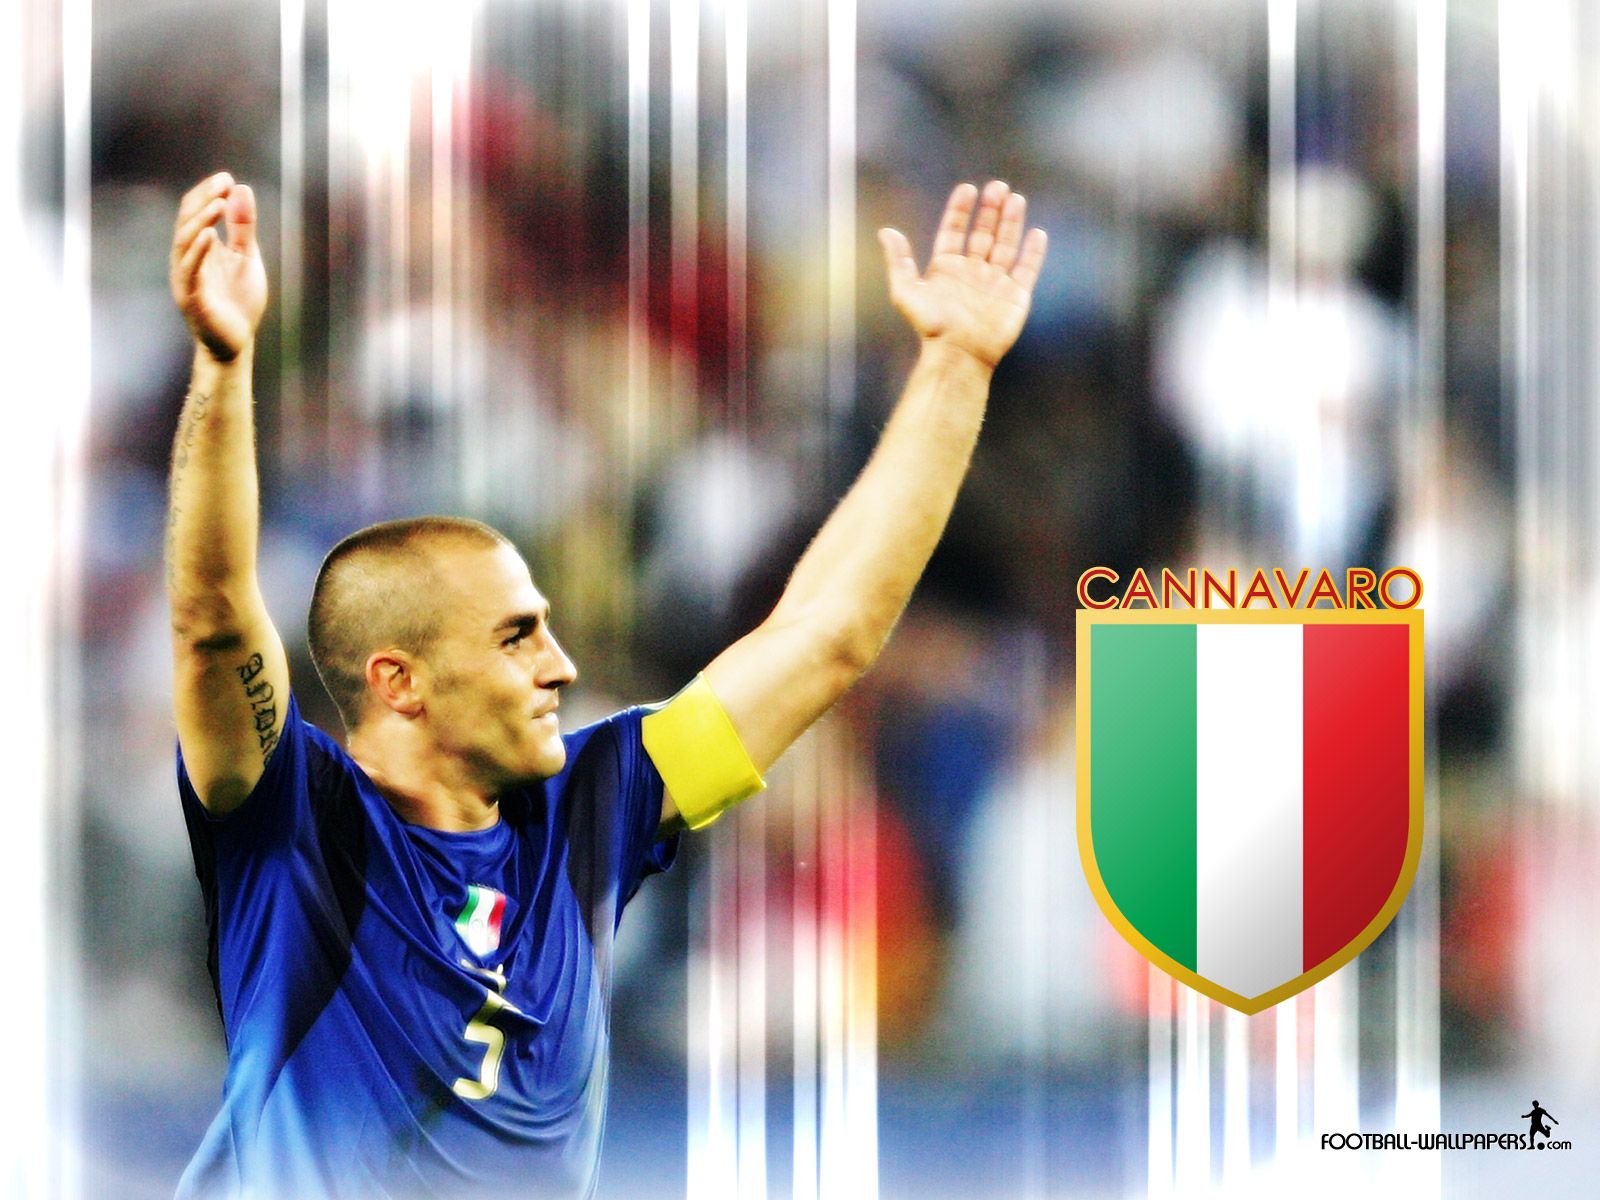 Fabio Cannavaro Wallpaper #1 | Football Wallpapers and Videos